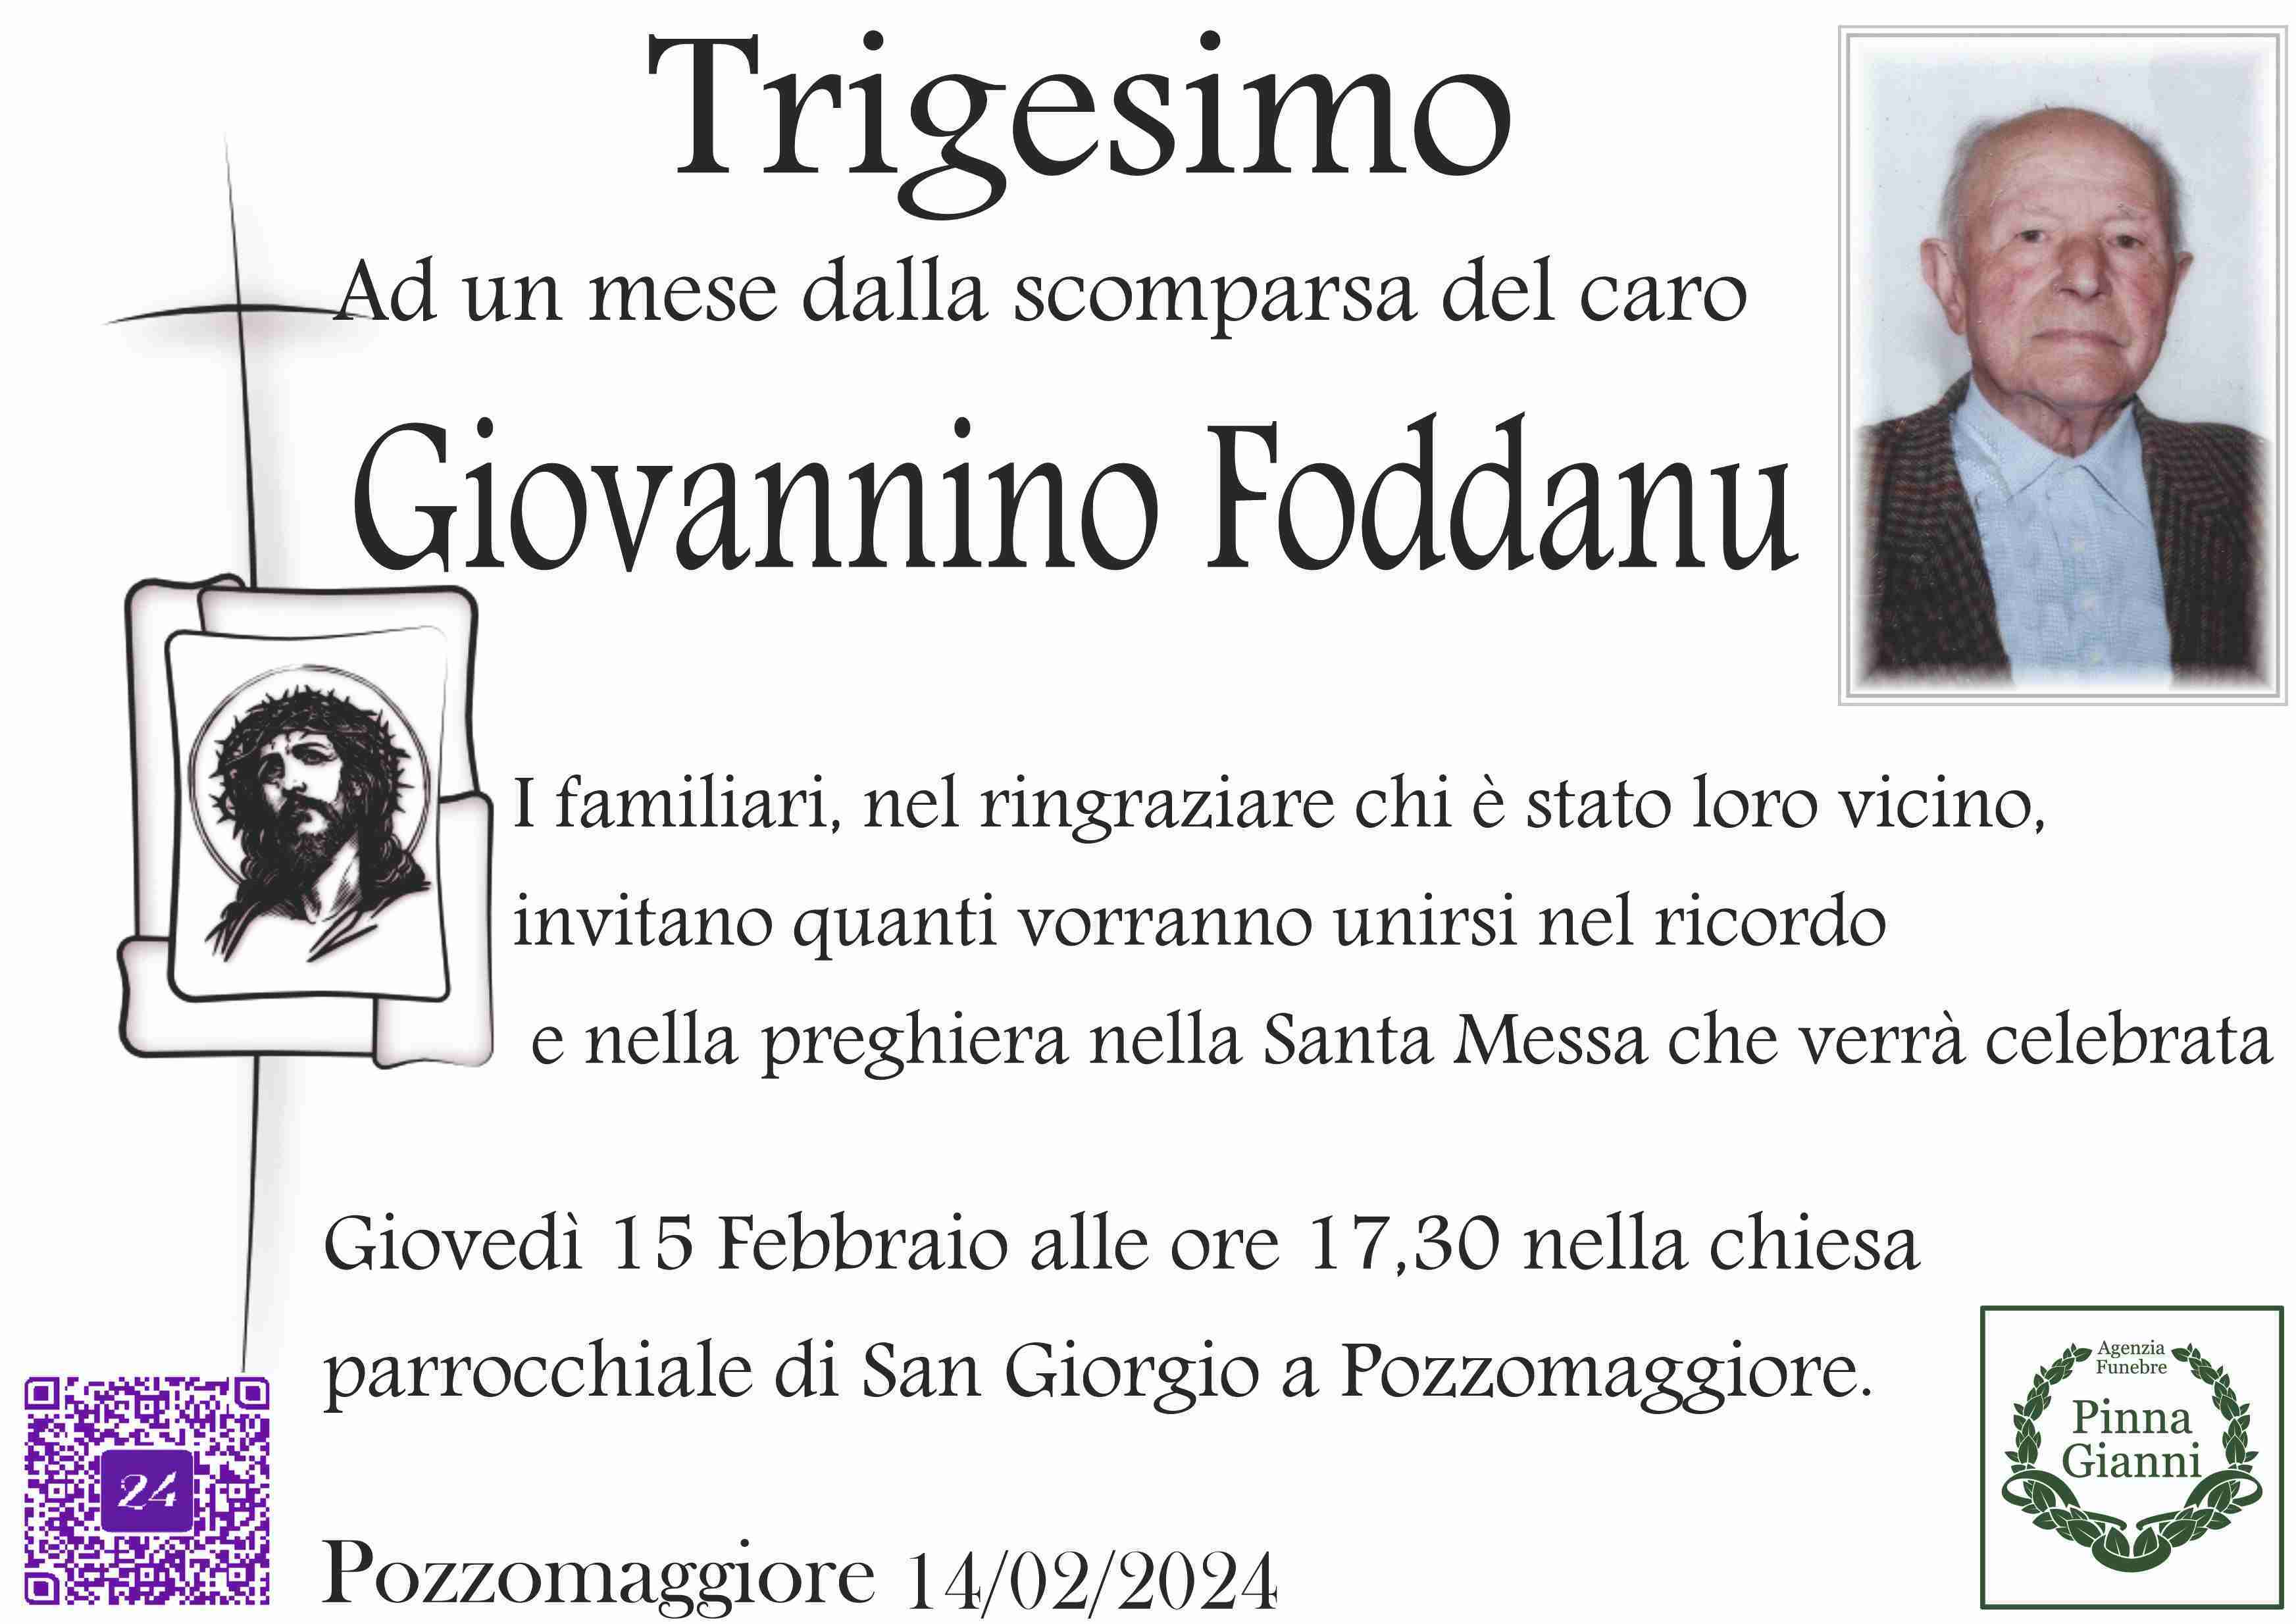 Giovannino Foddanu